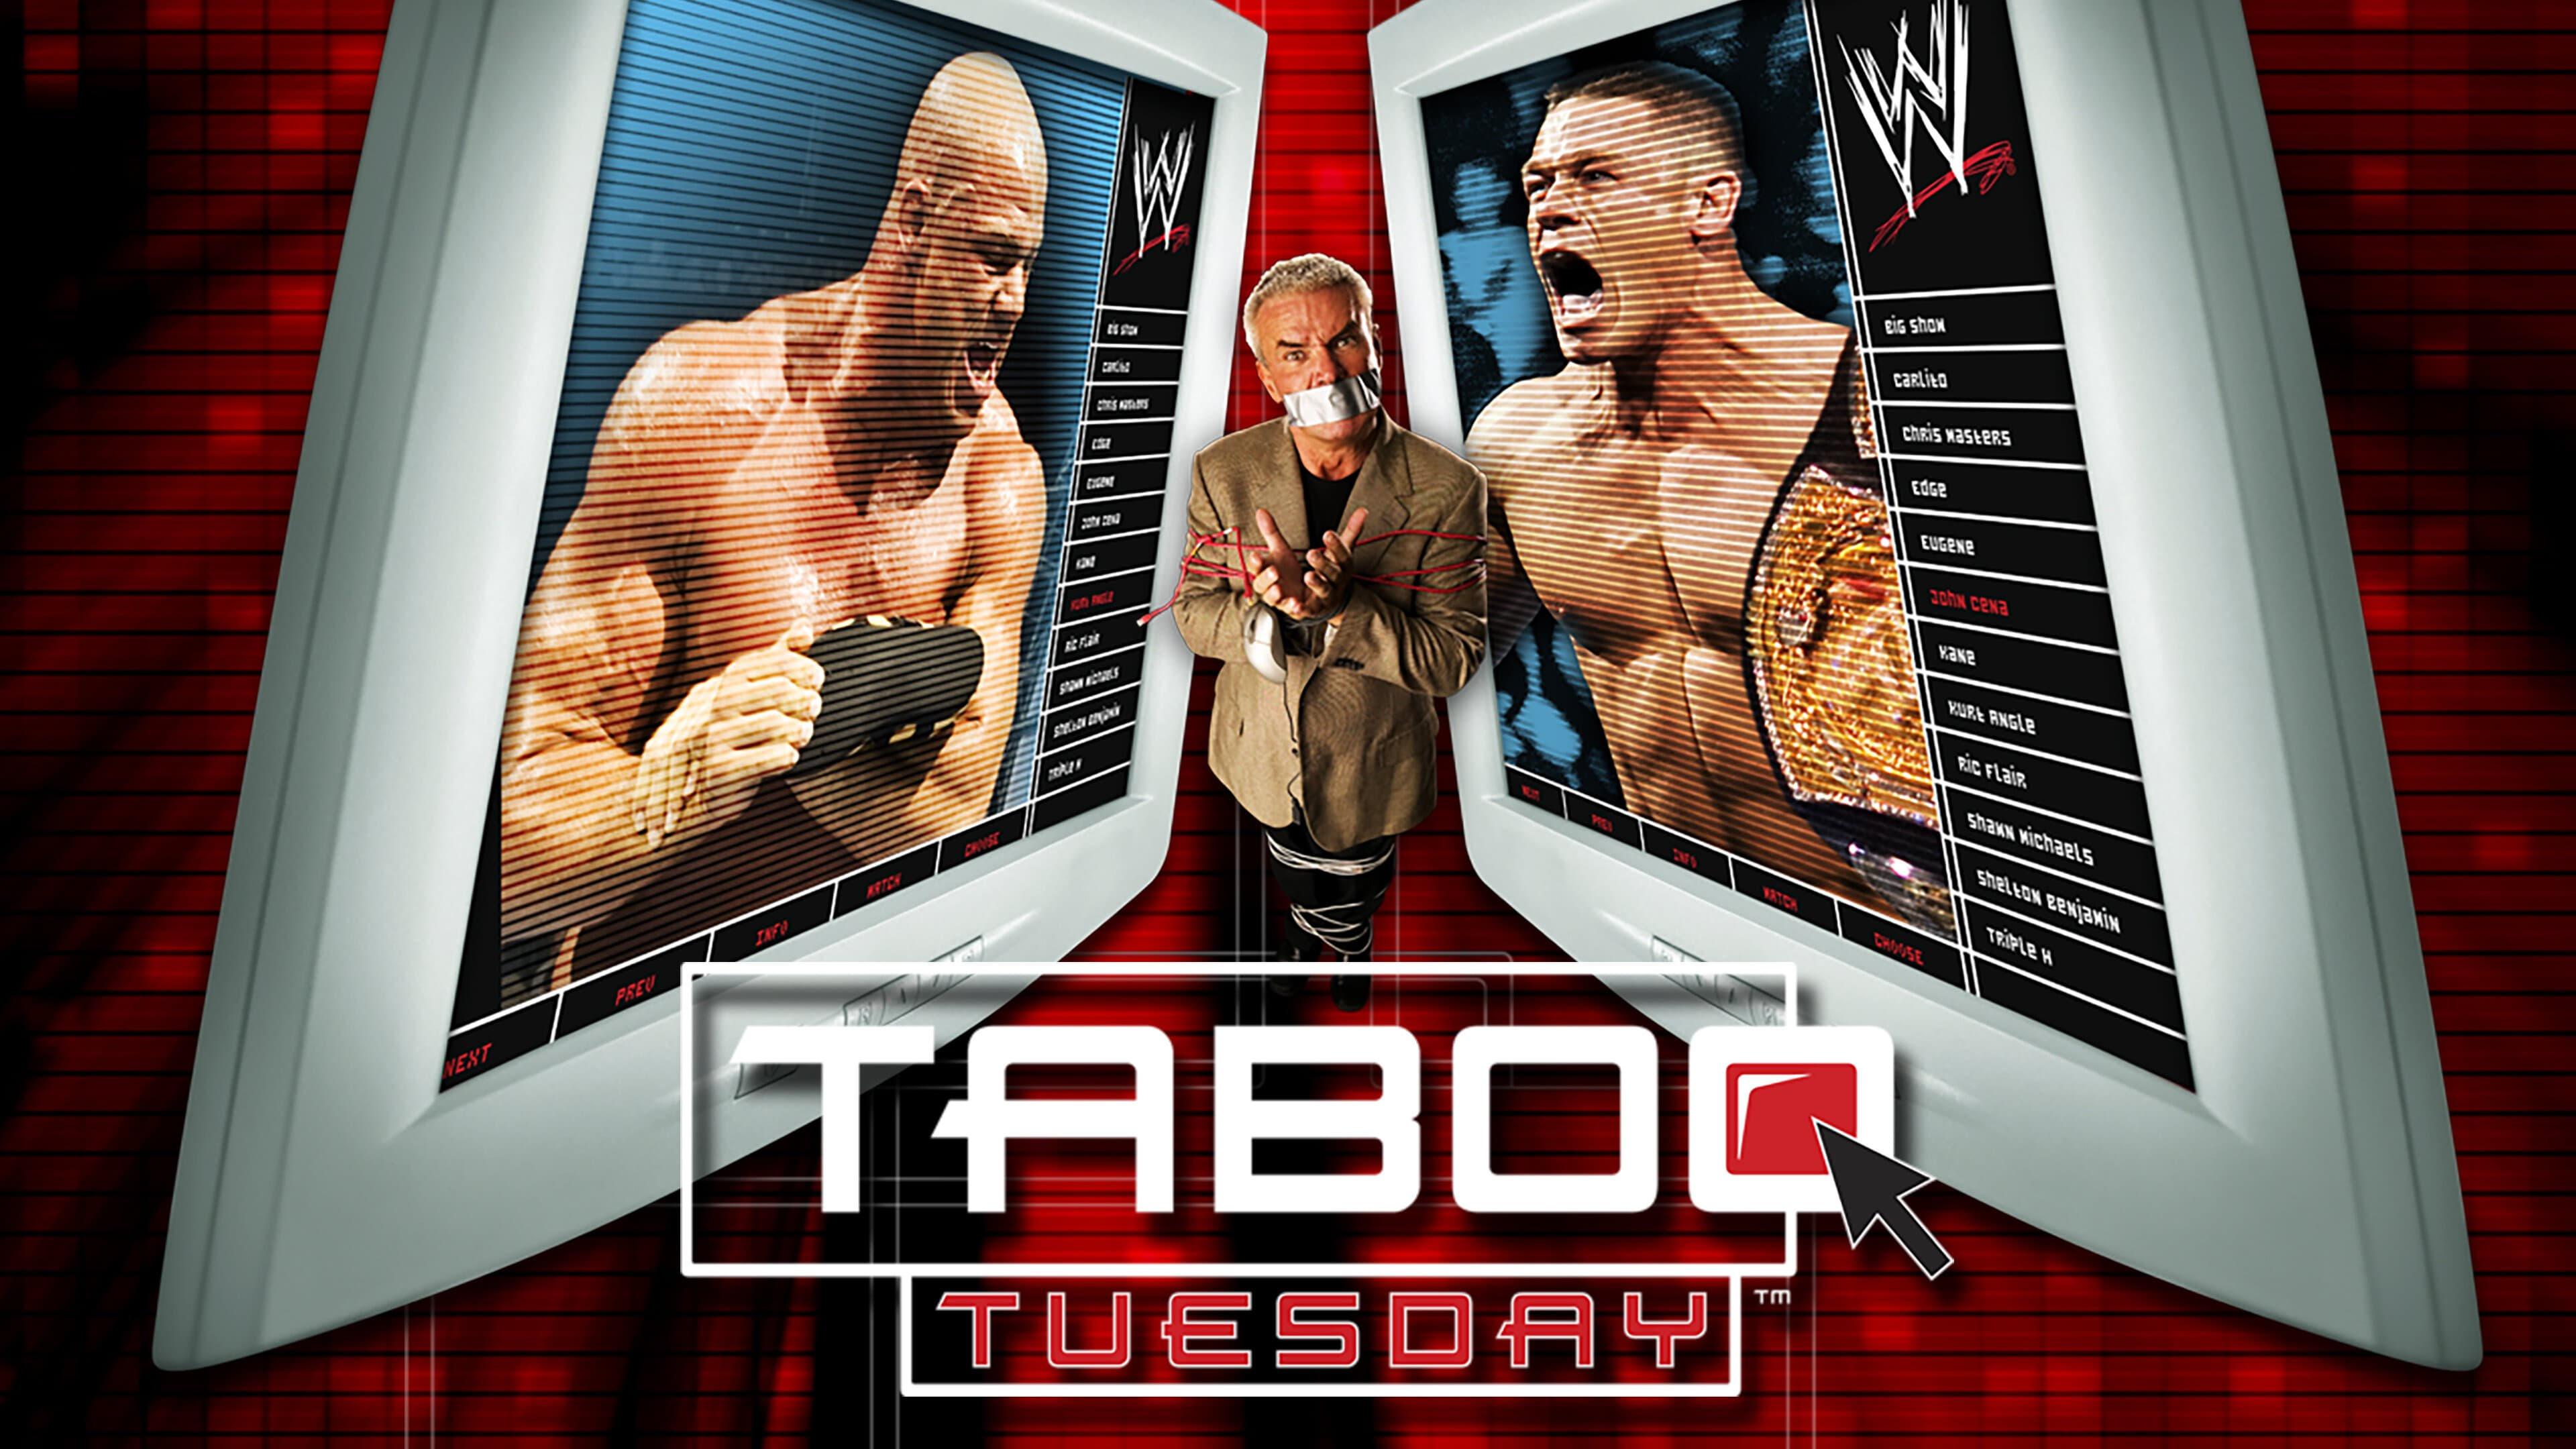 WWE Taboo Tuesday 2005 backdrop